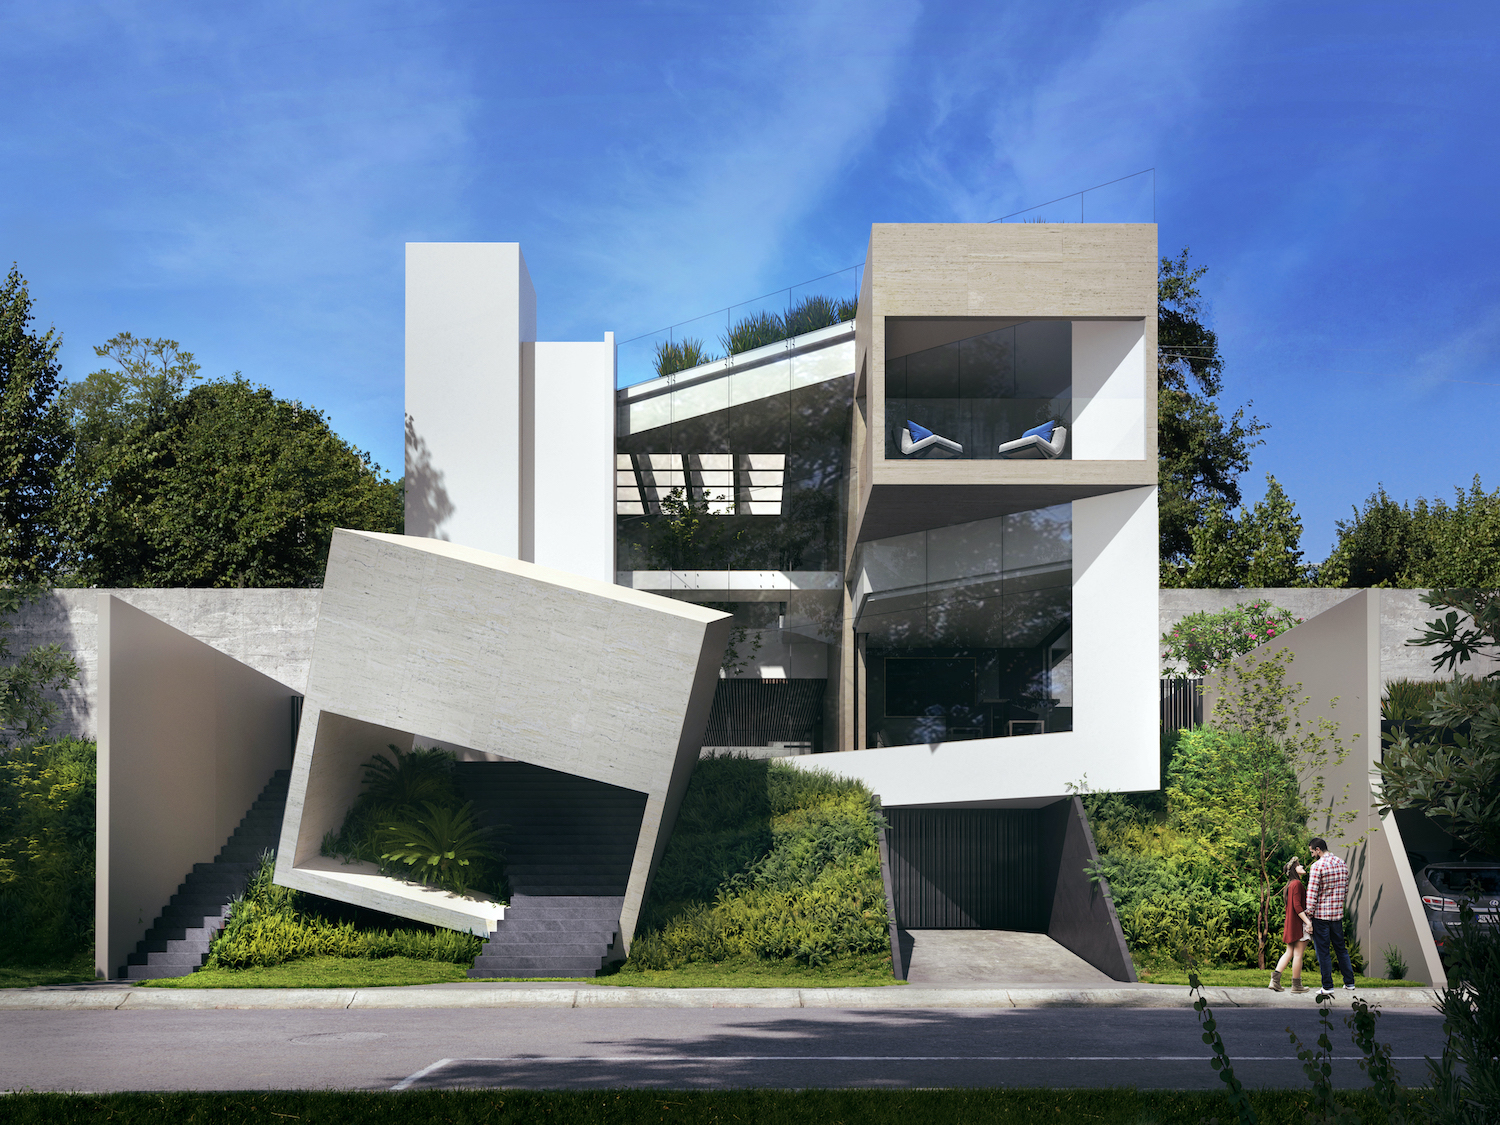 Casa CC designed by Lassala + Orozco Arc|Houses